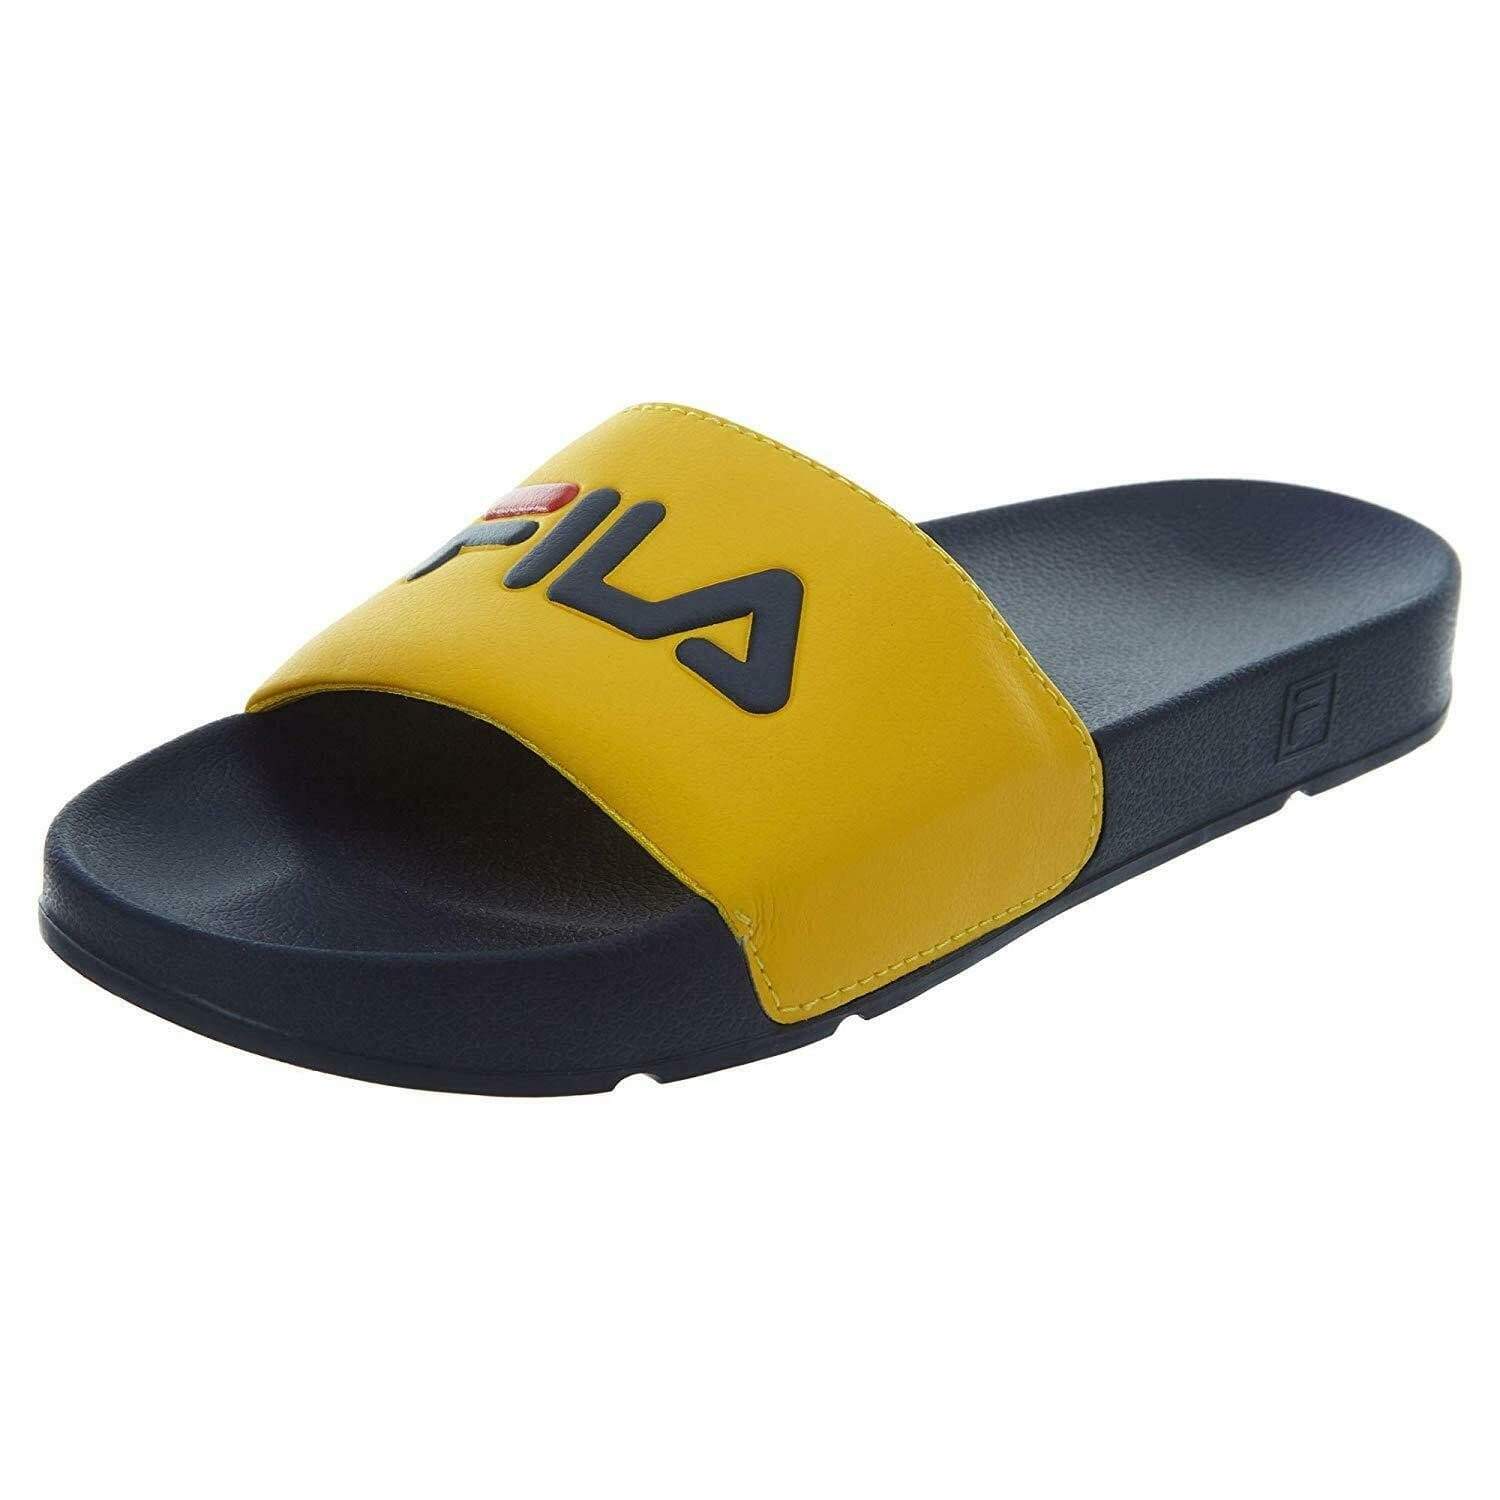 fila sandals mens yellow